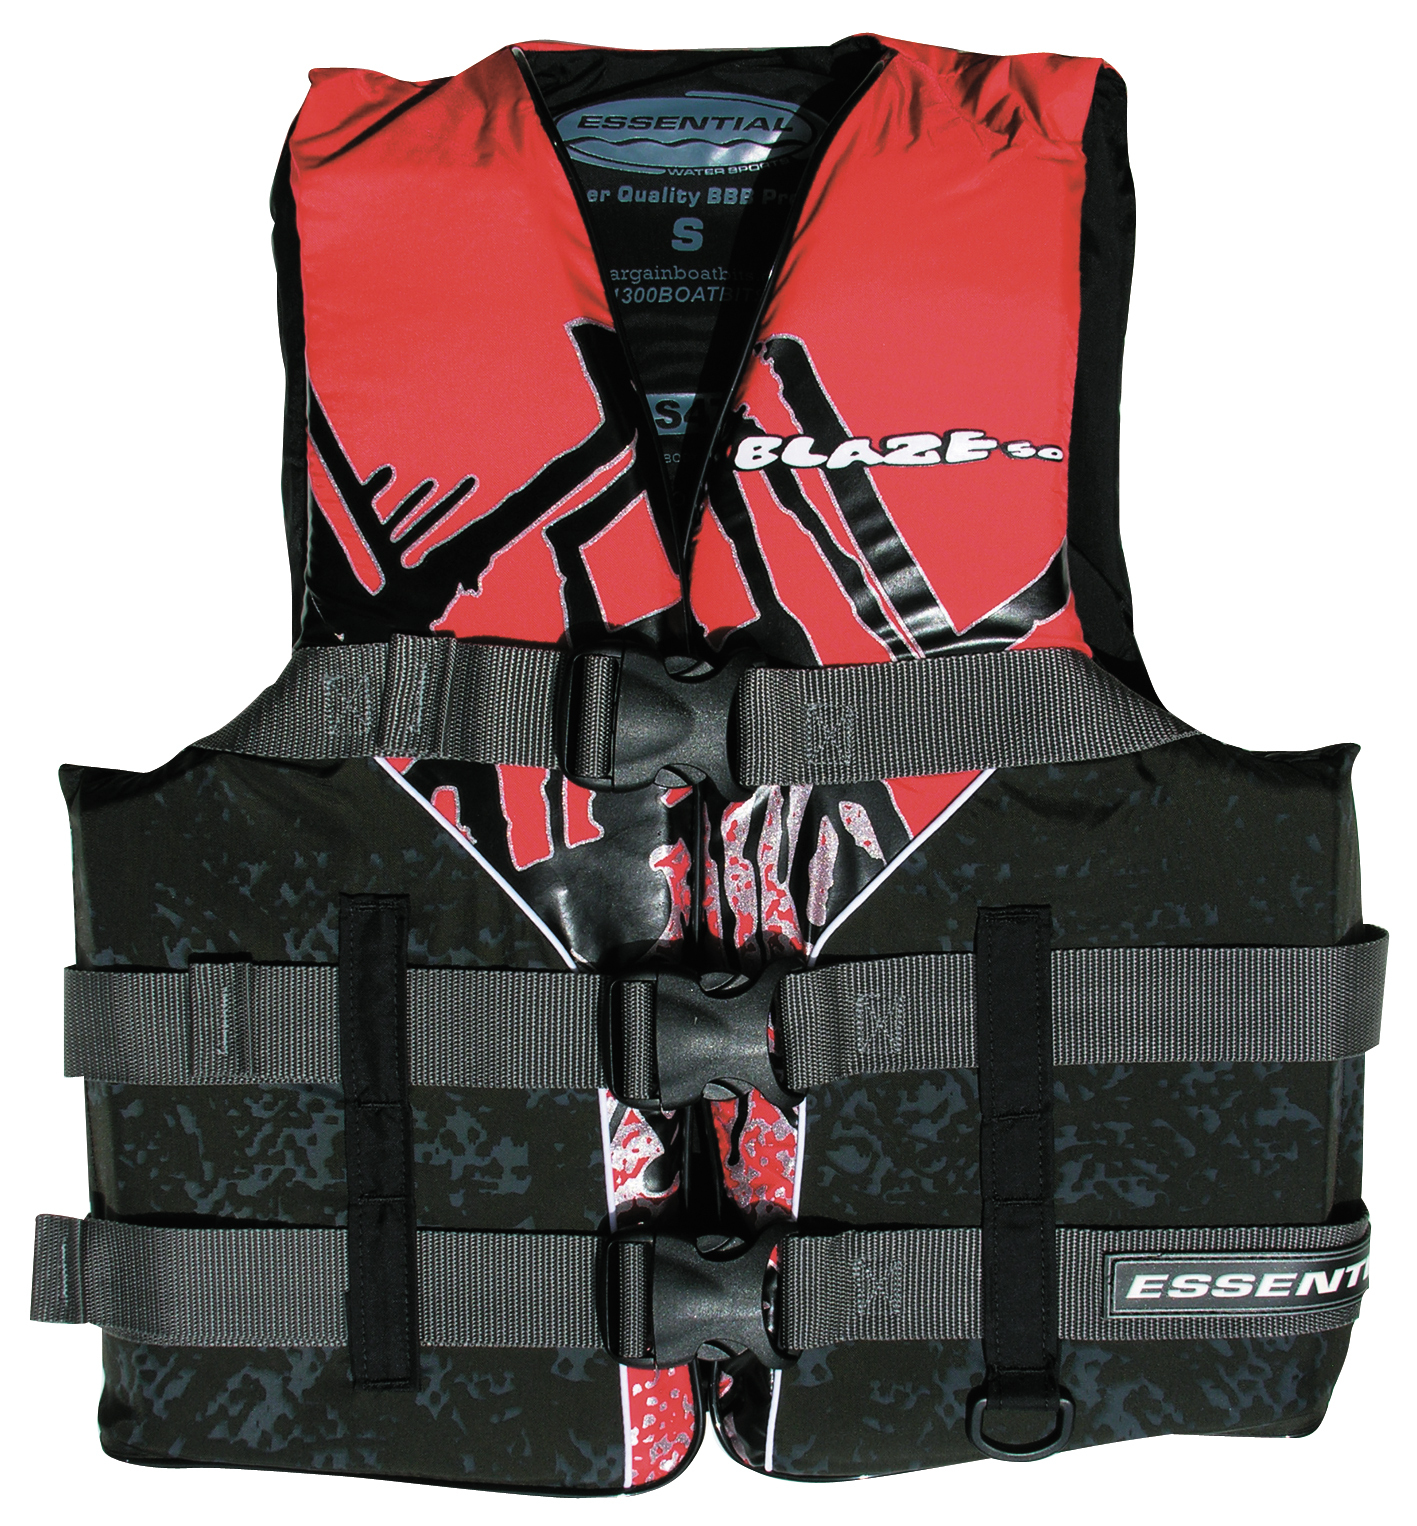 Essential Blaze L50 Adult Medium Ski Vest Red